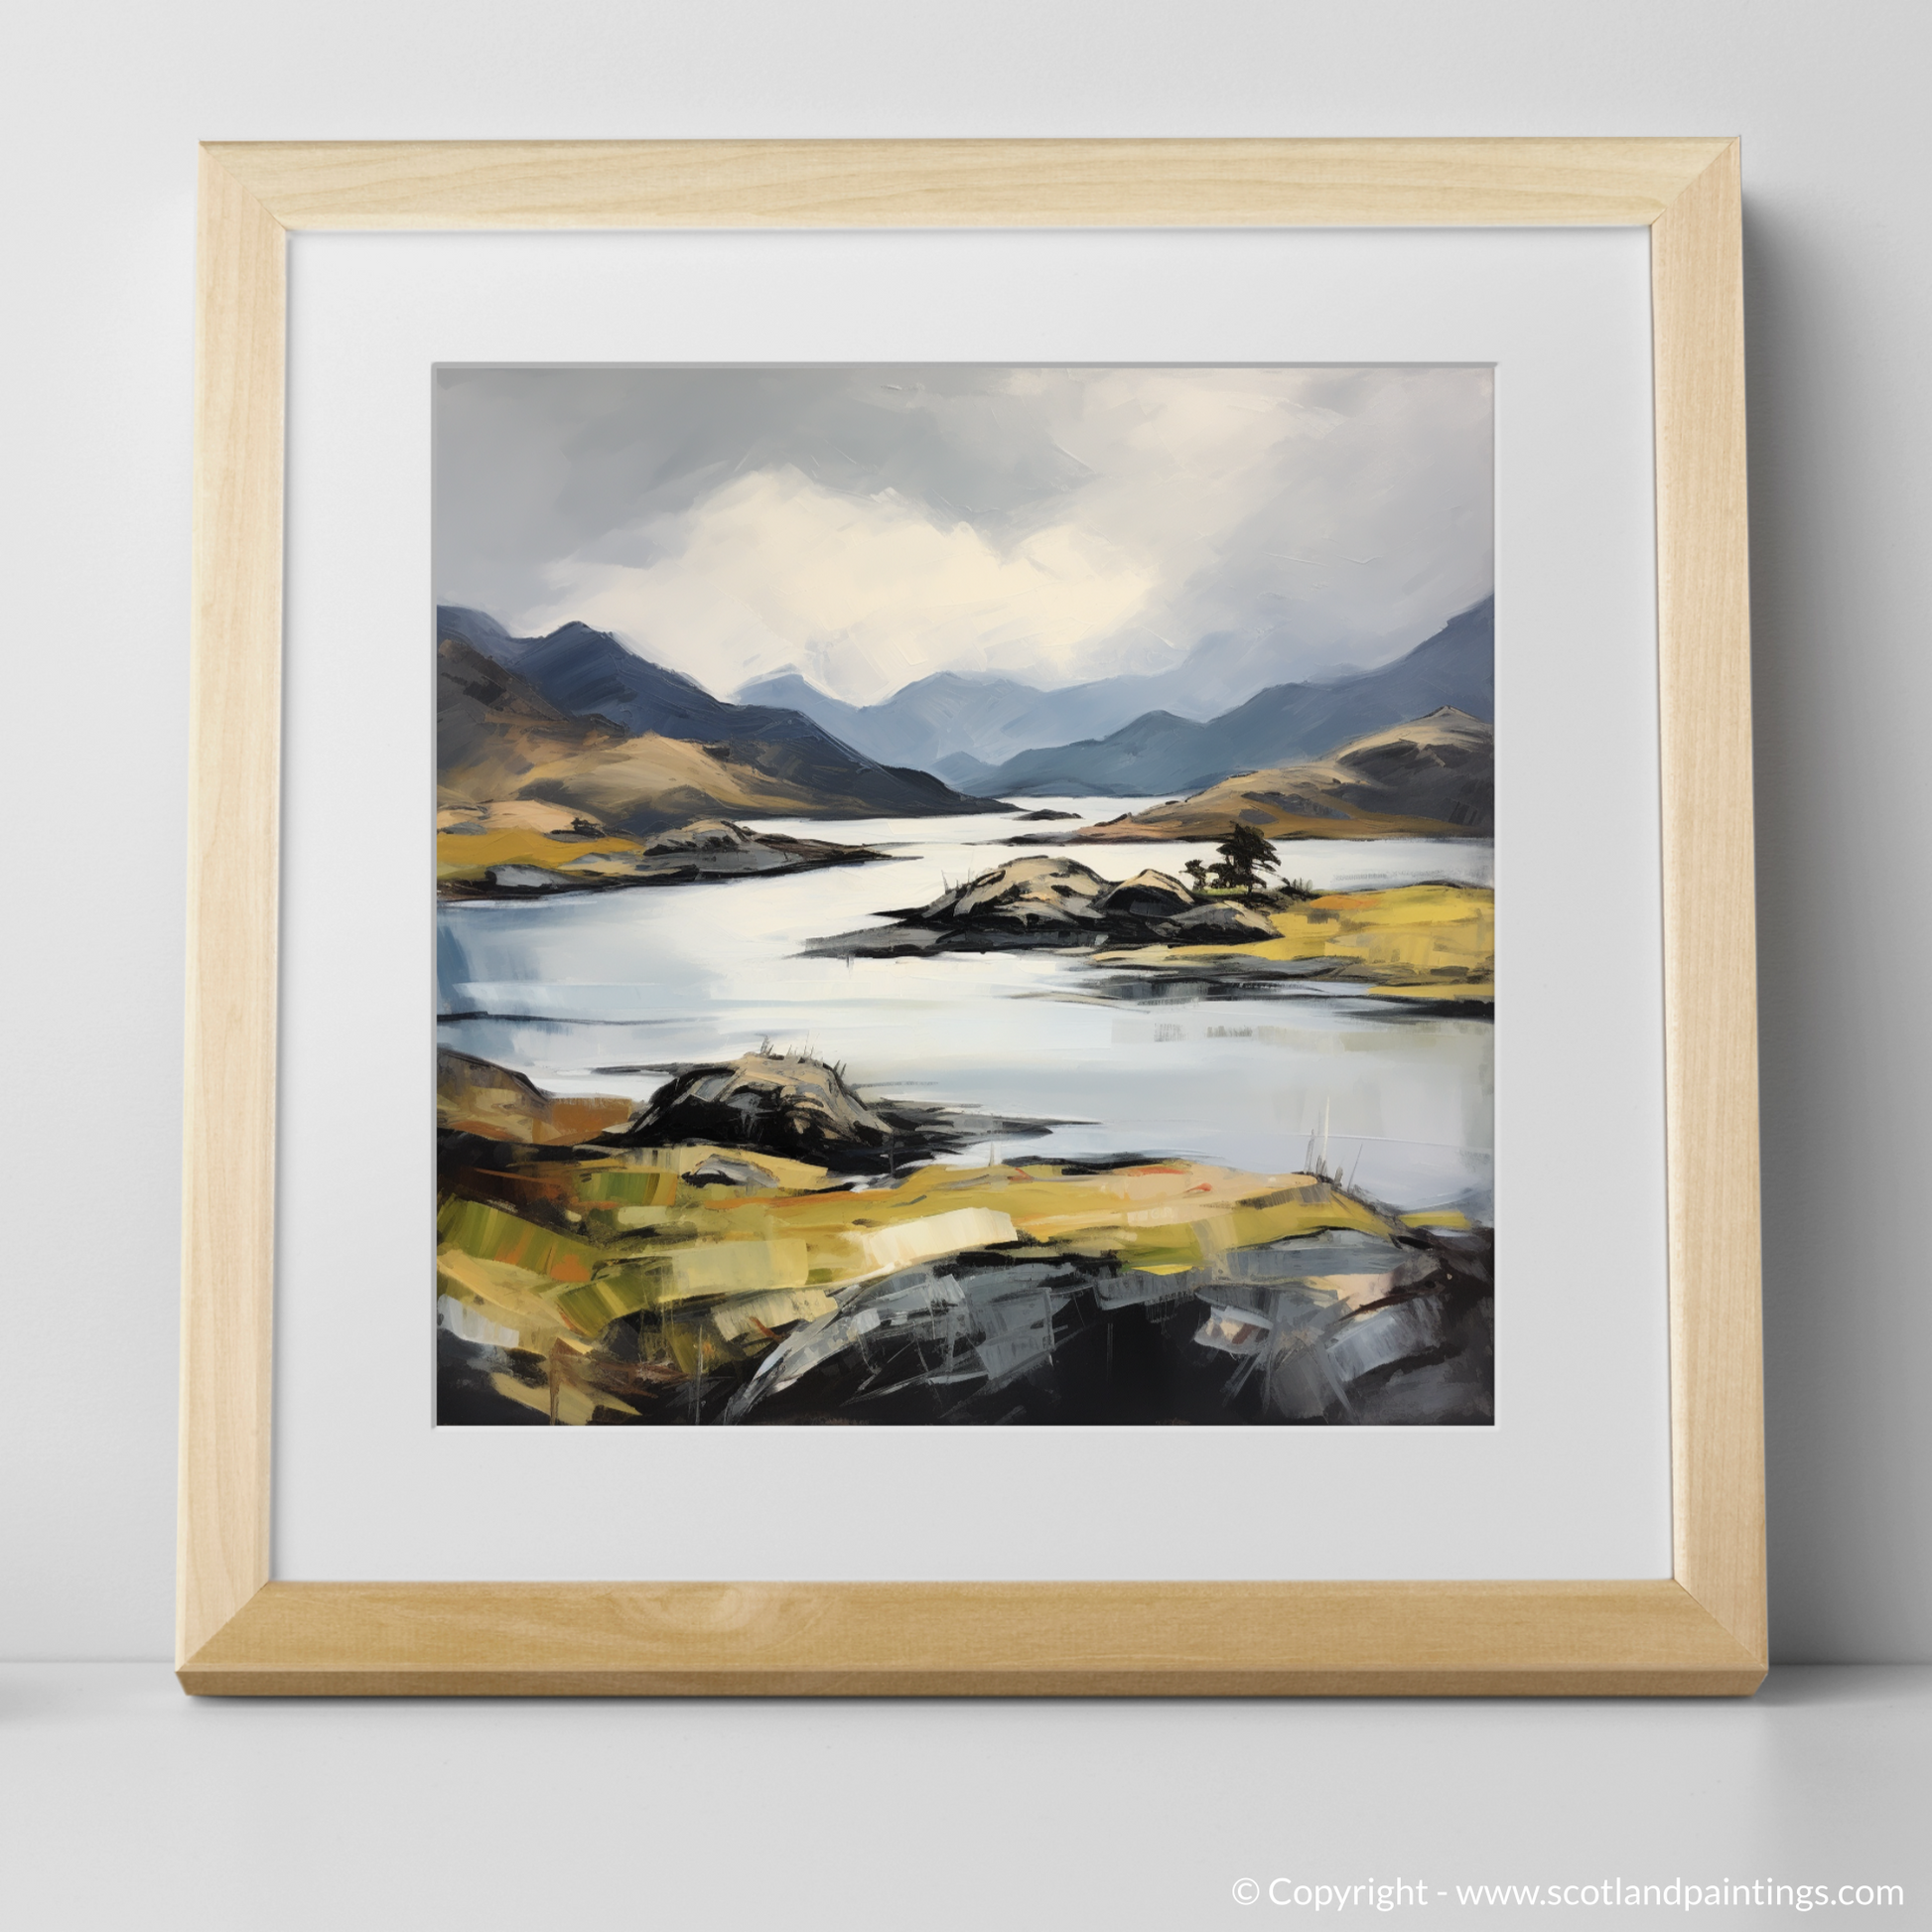 Art Print of Loch Morar, Highlands with a natural frame